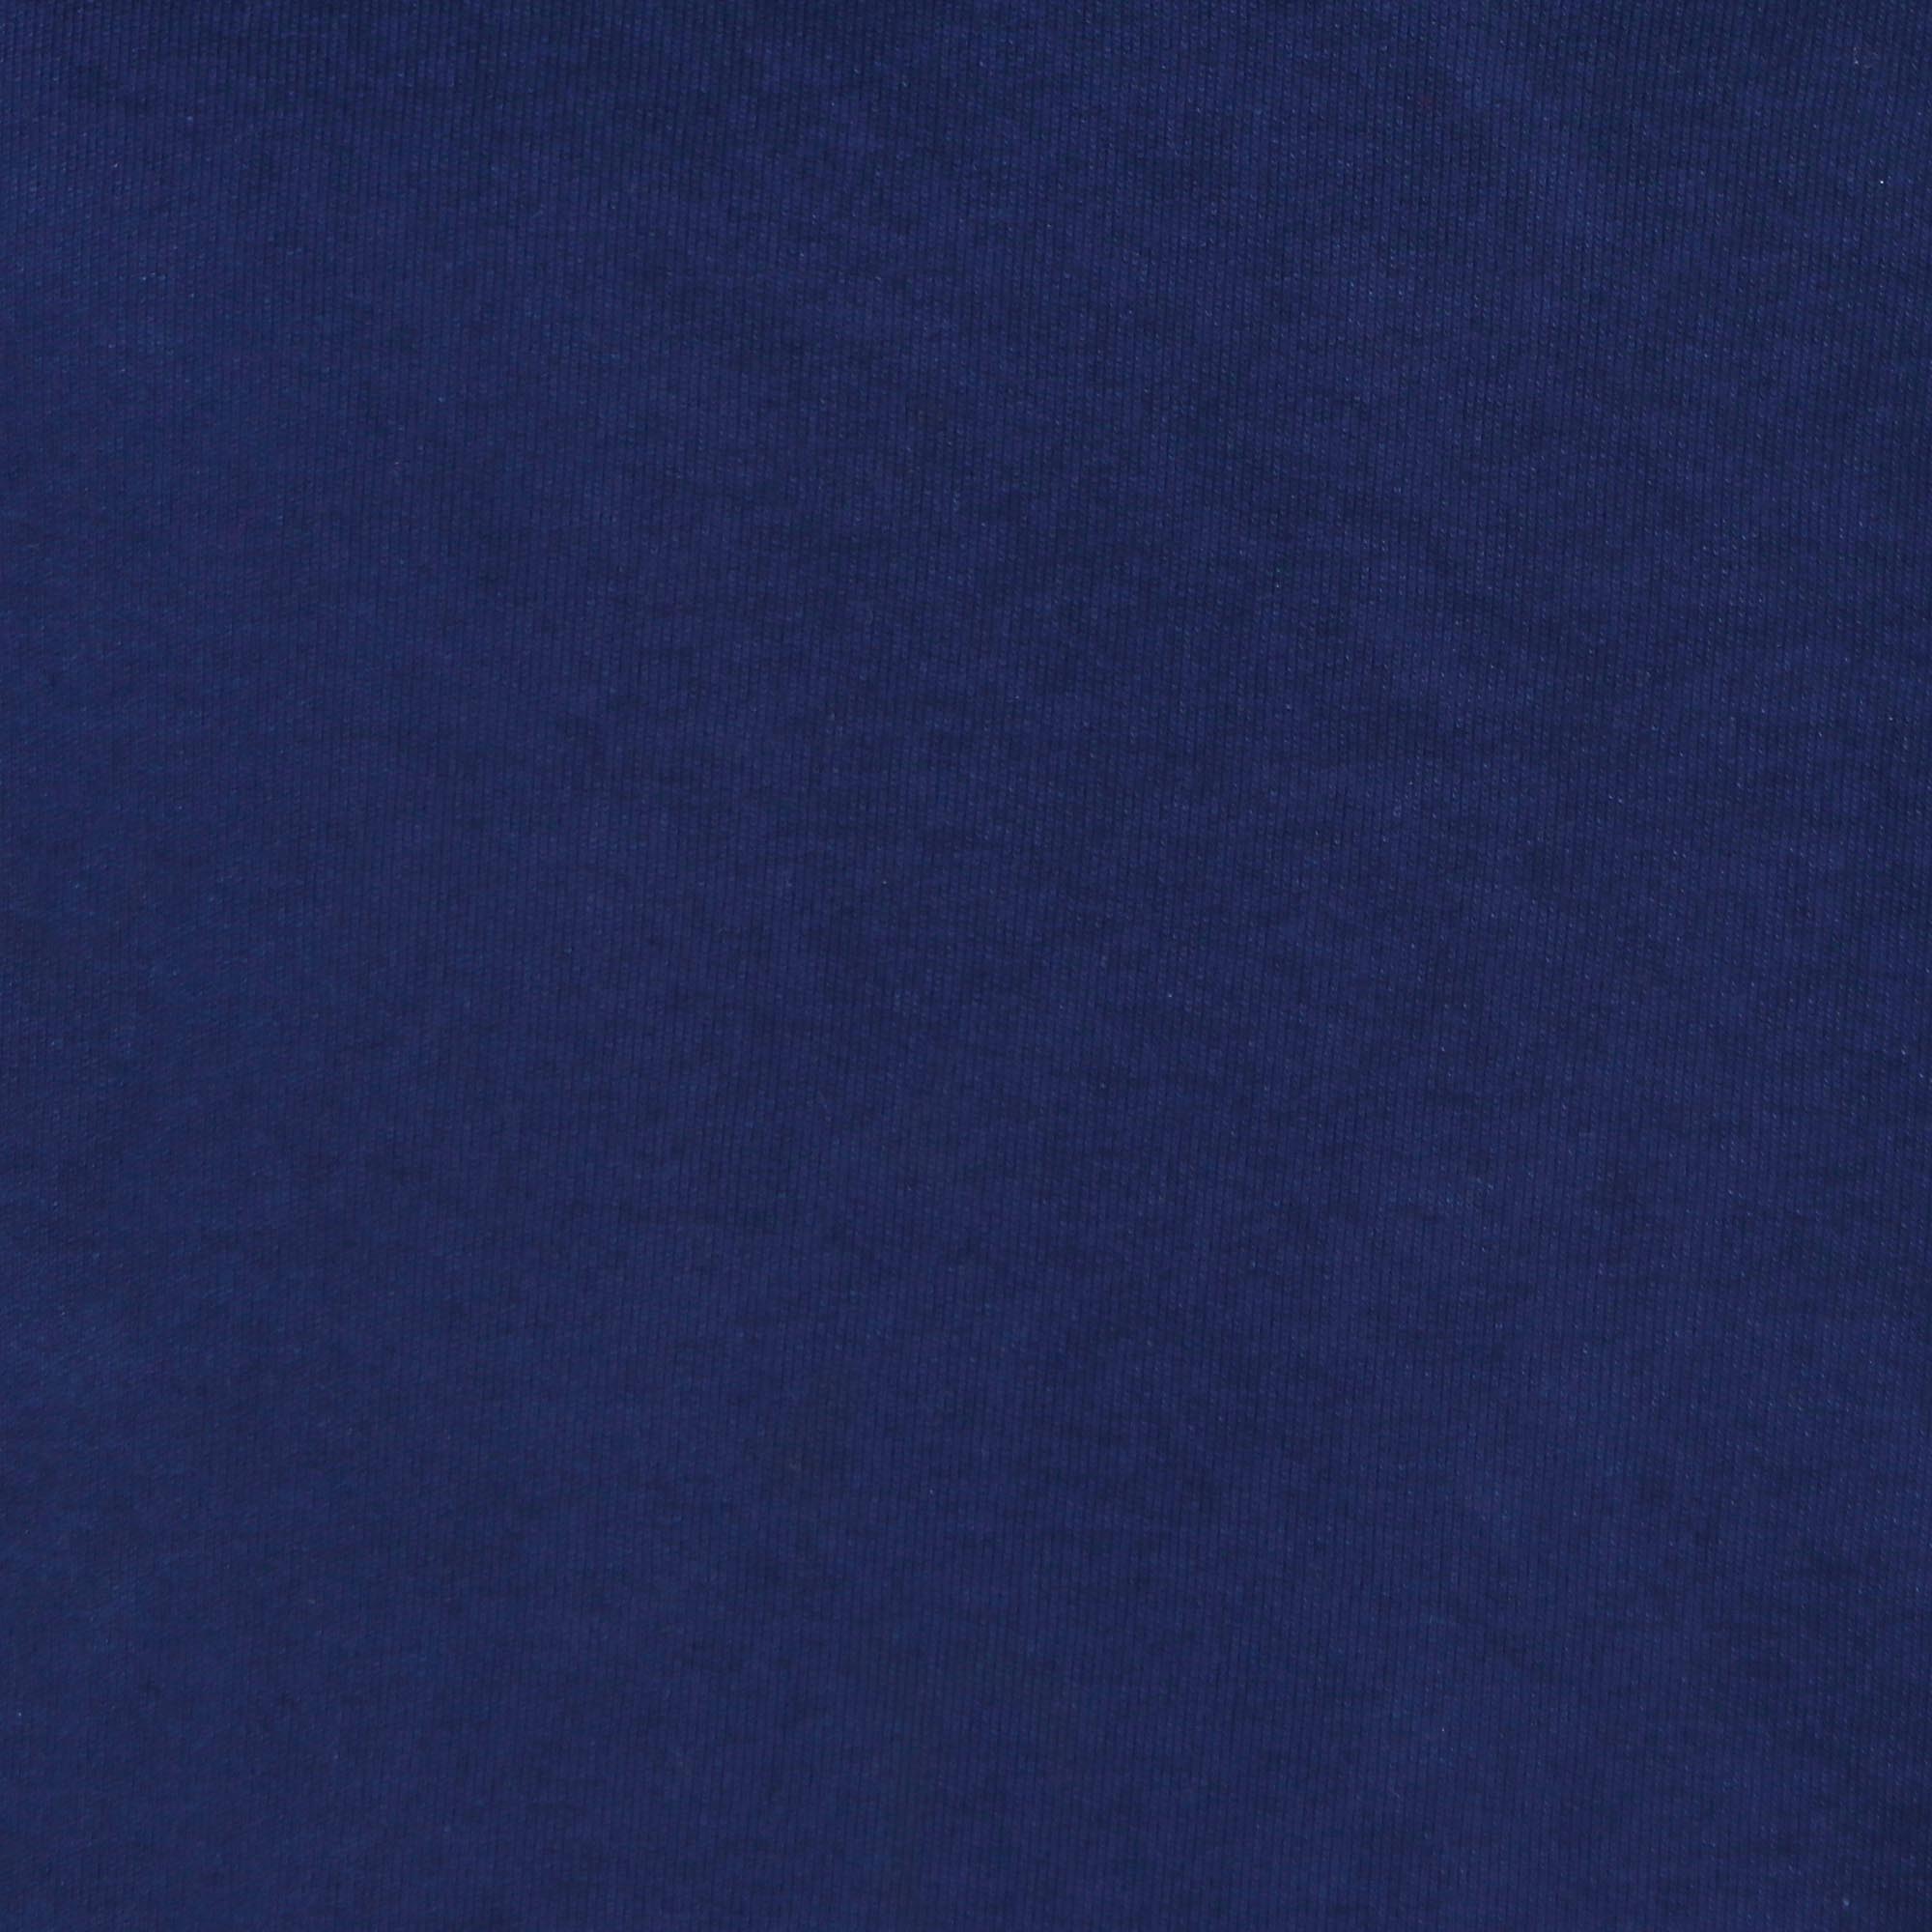 Мужская футболка-поло Diva Teks синяя (DTD-10), цвет синий, размер 48-50 - фото 6